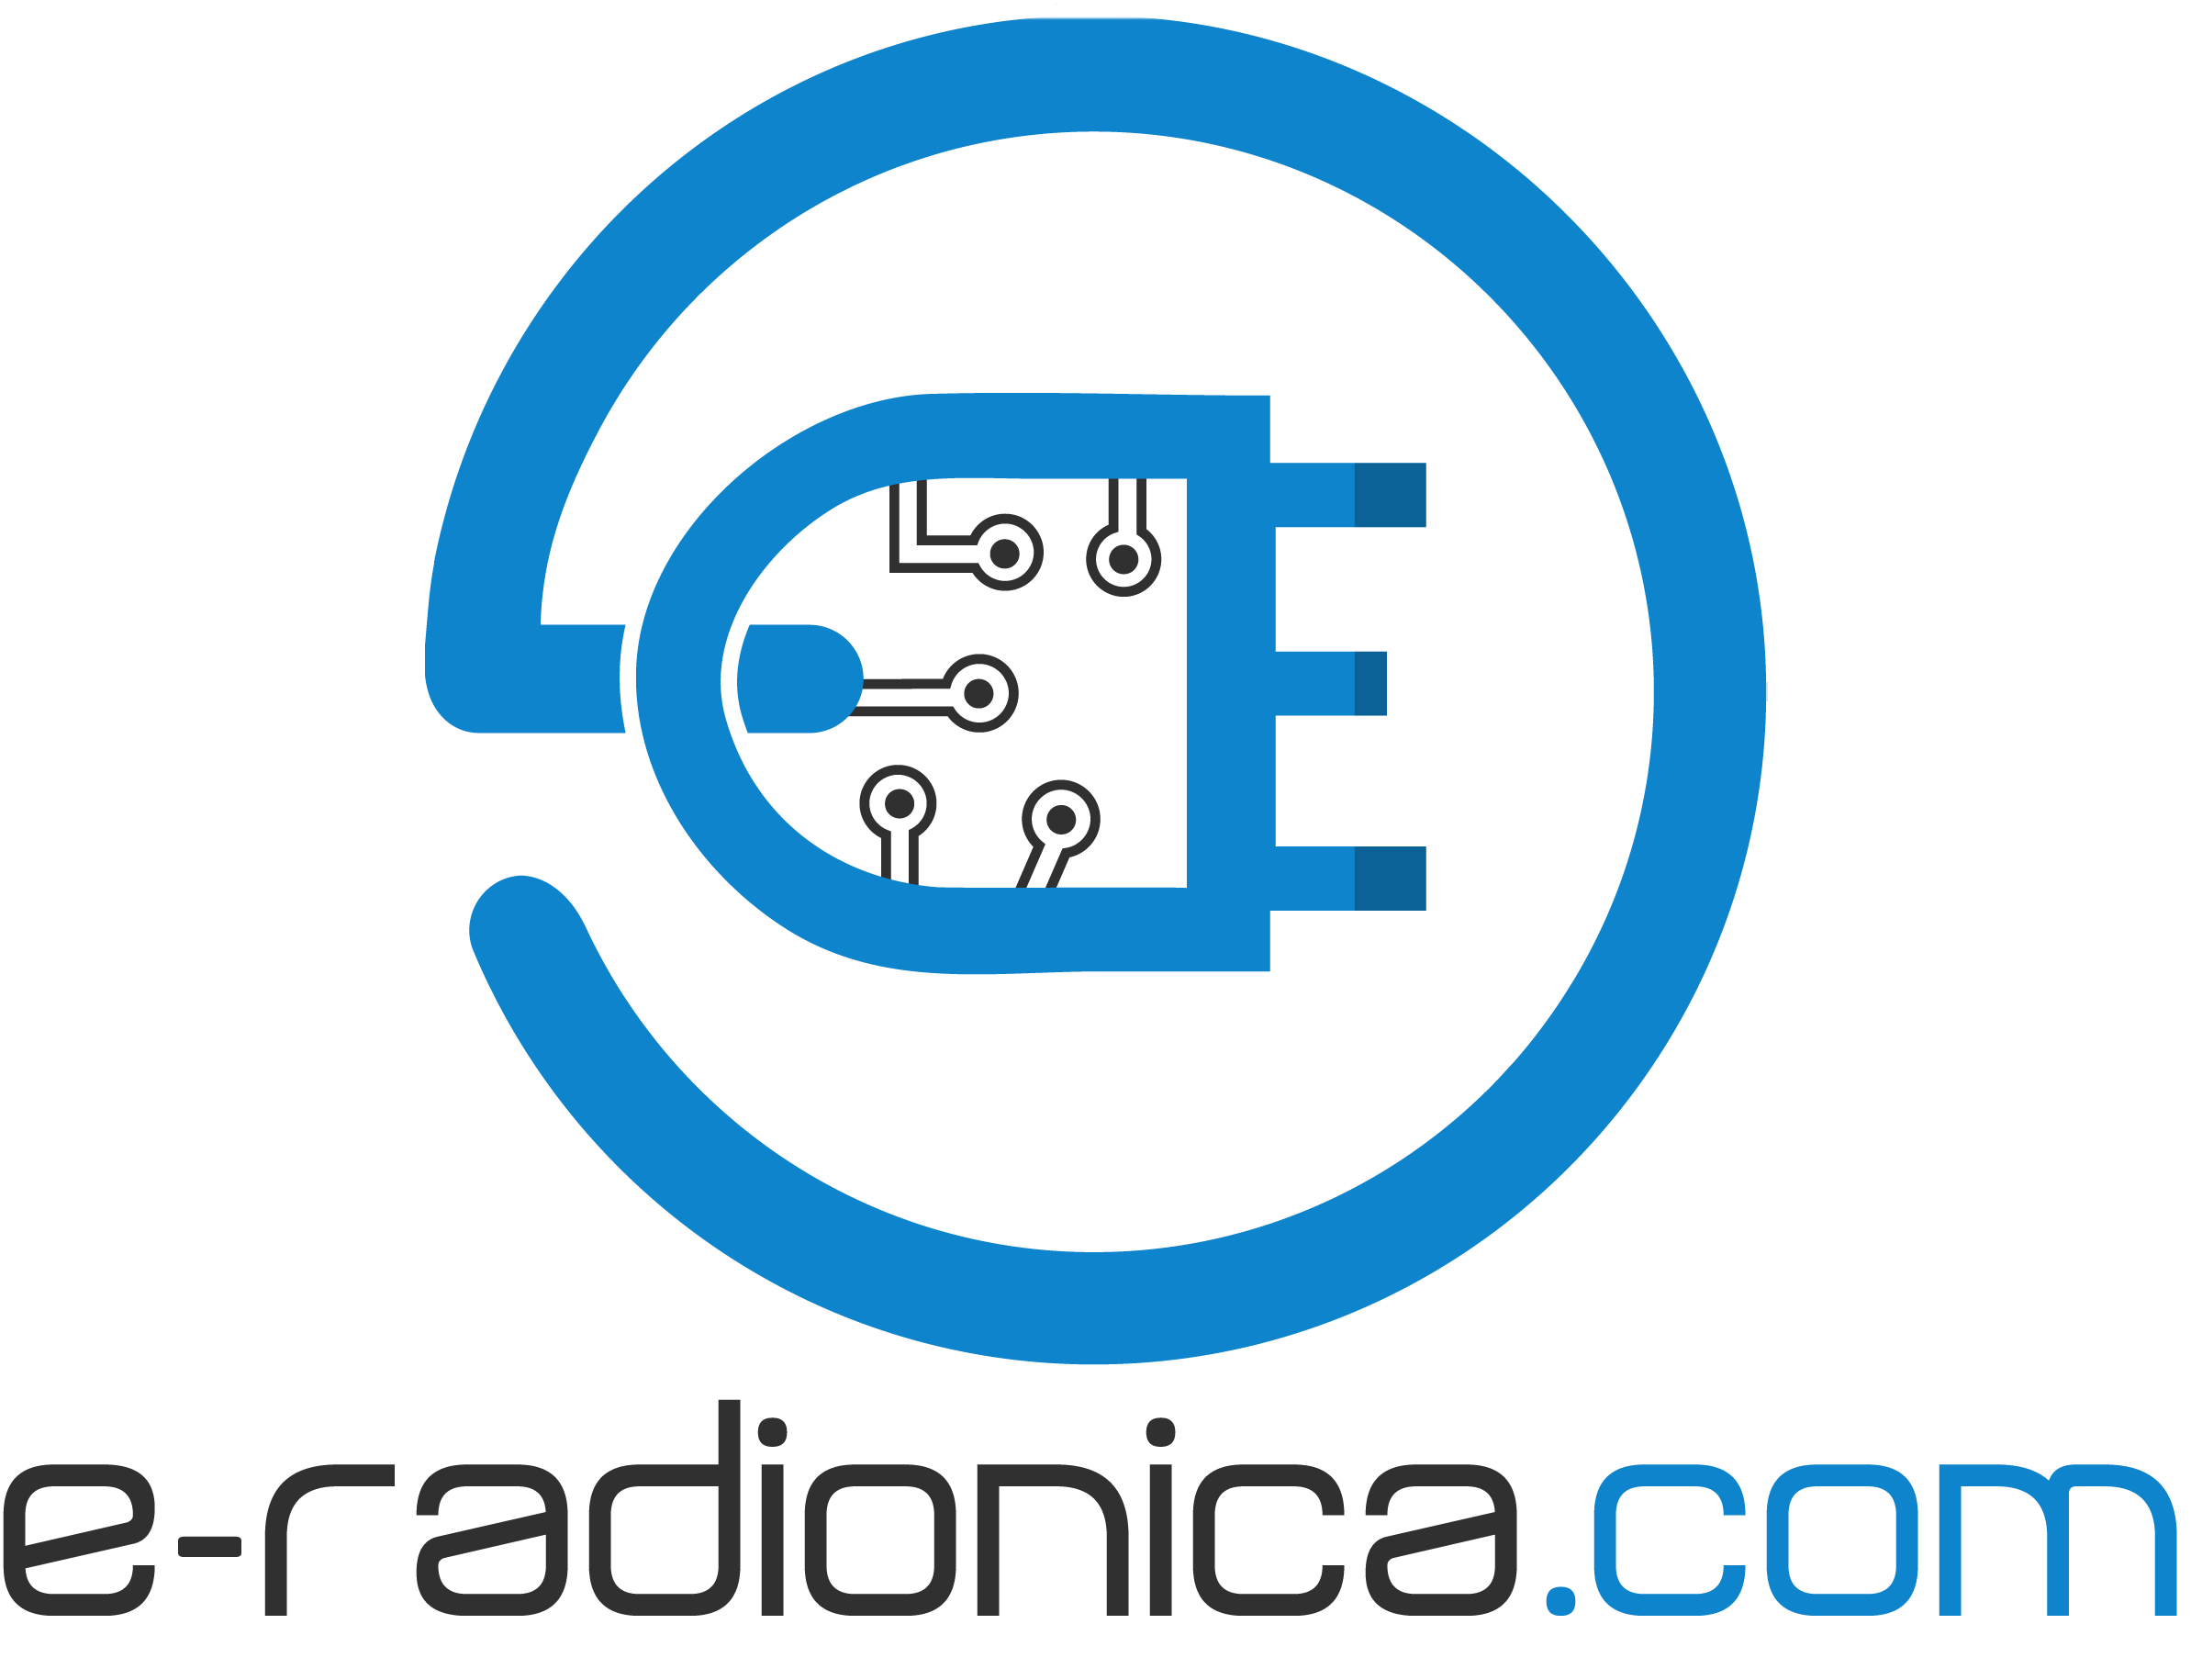 Donation of the company e-radionica.com